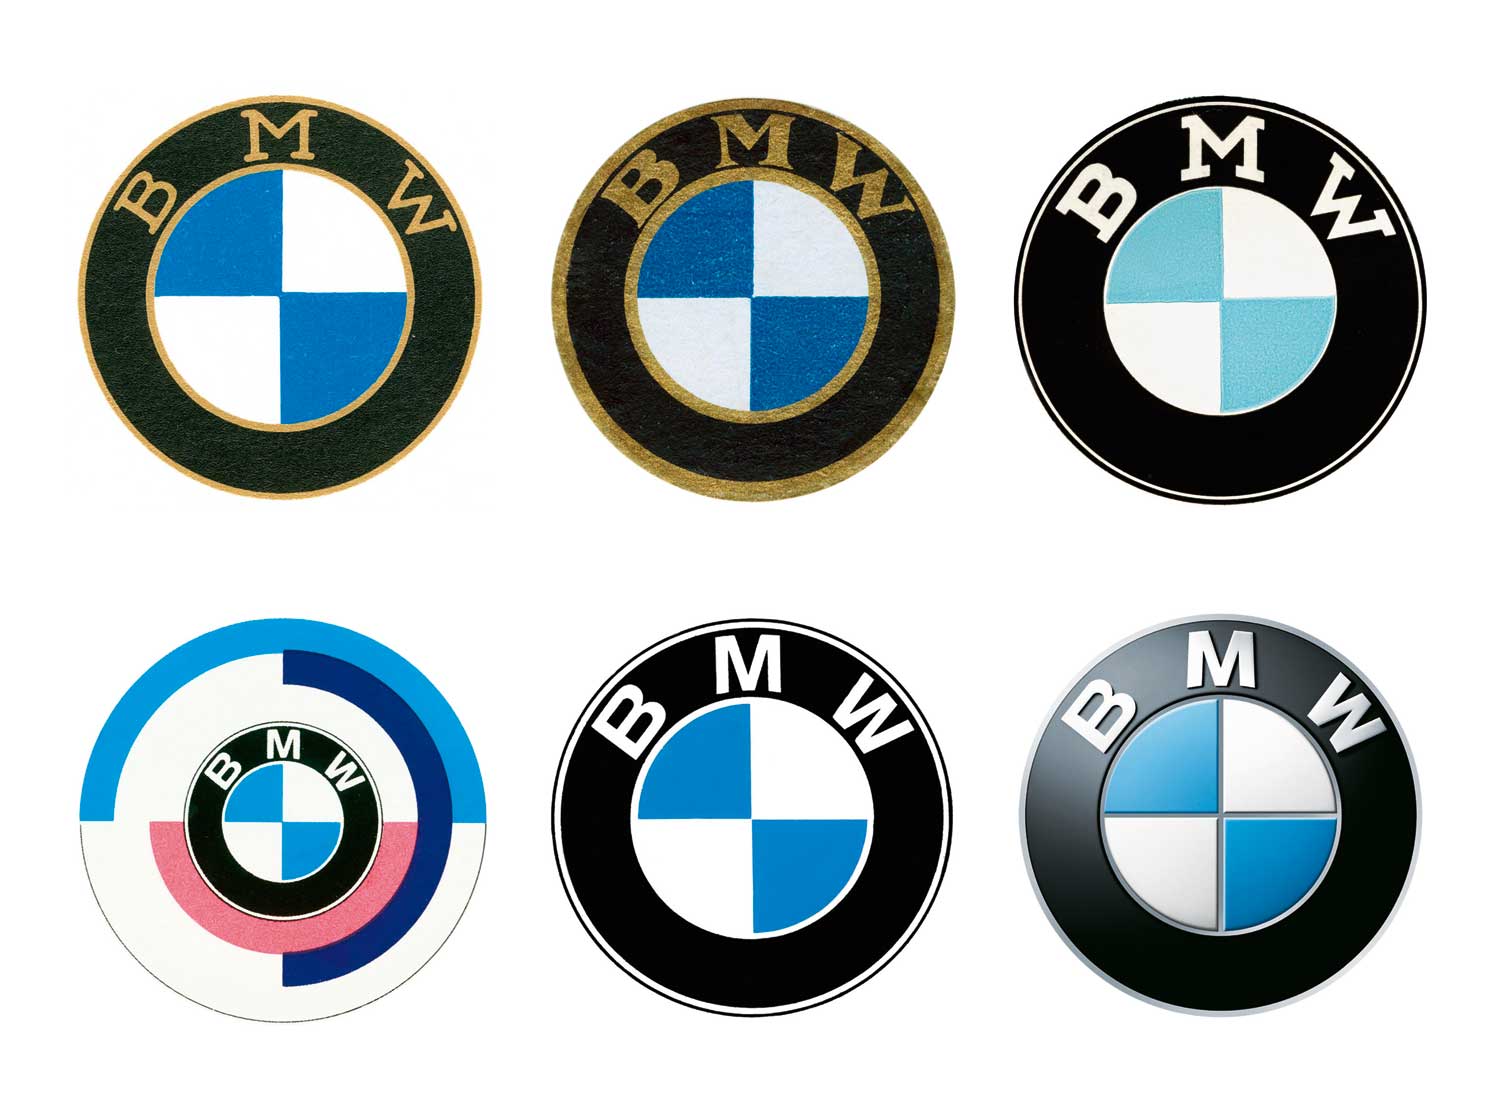 Bmw logos history #3